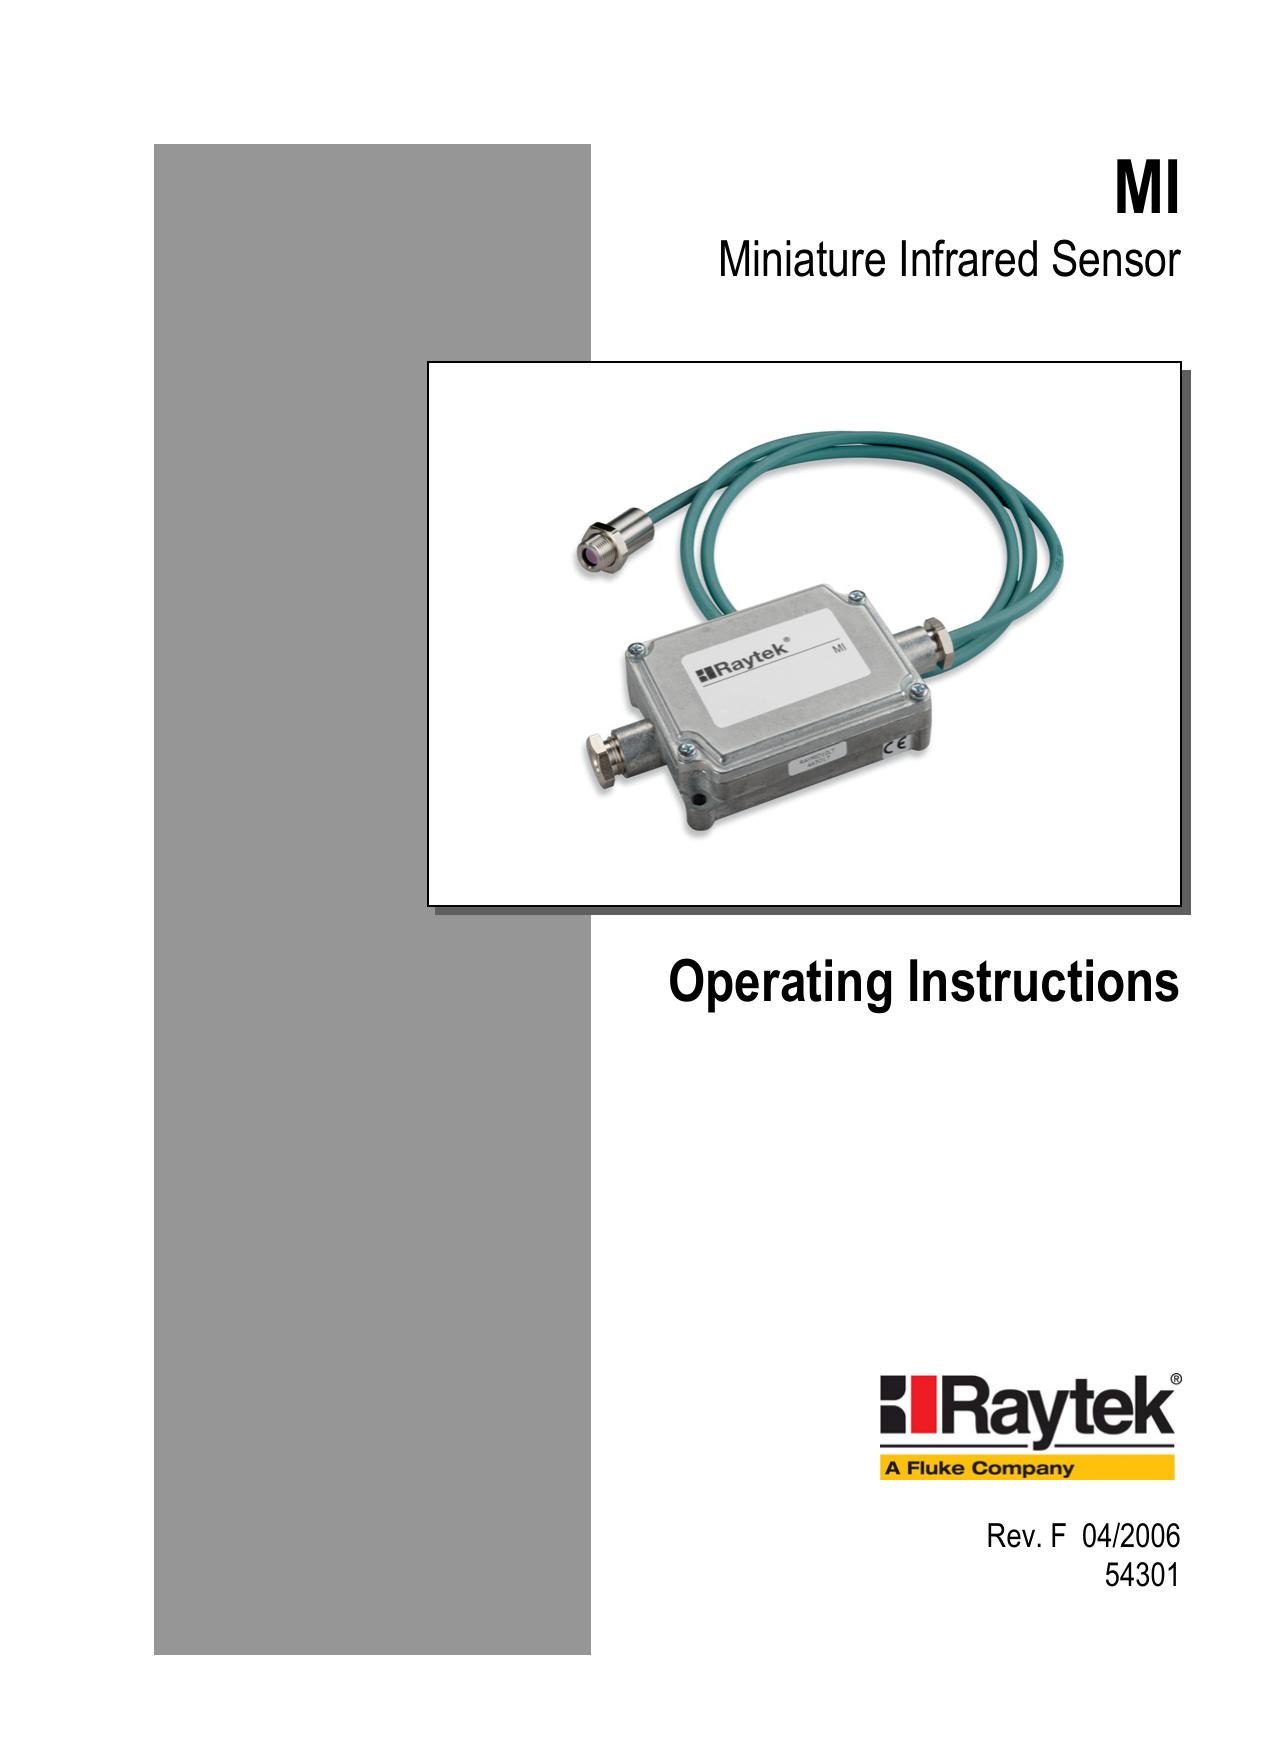 RayTek MI Miniature Infrared Sensor Thermometer User Manual